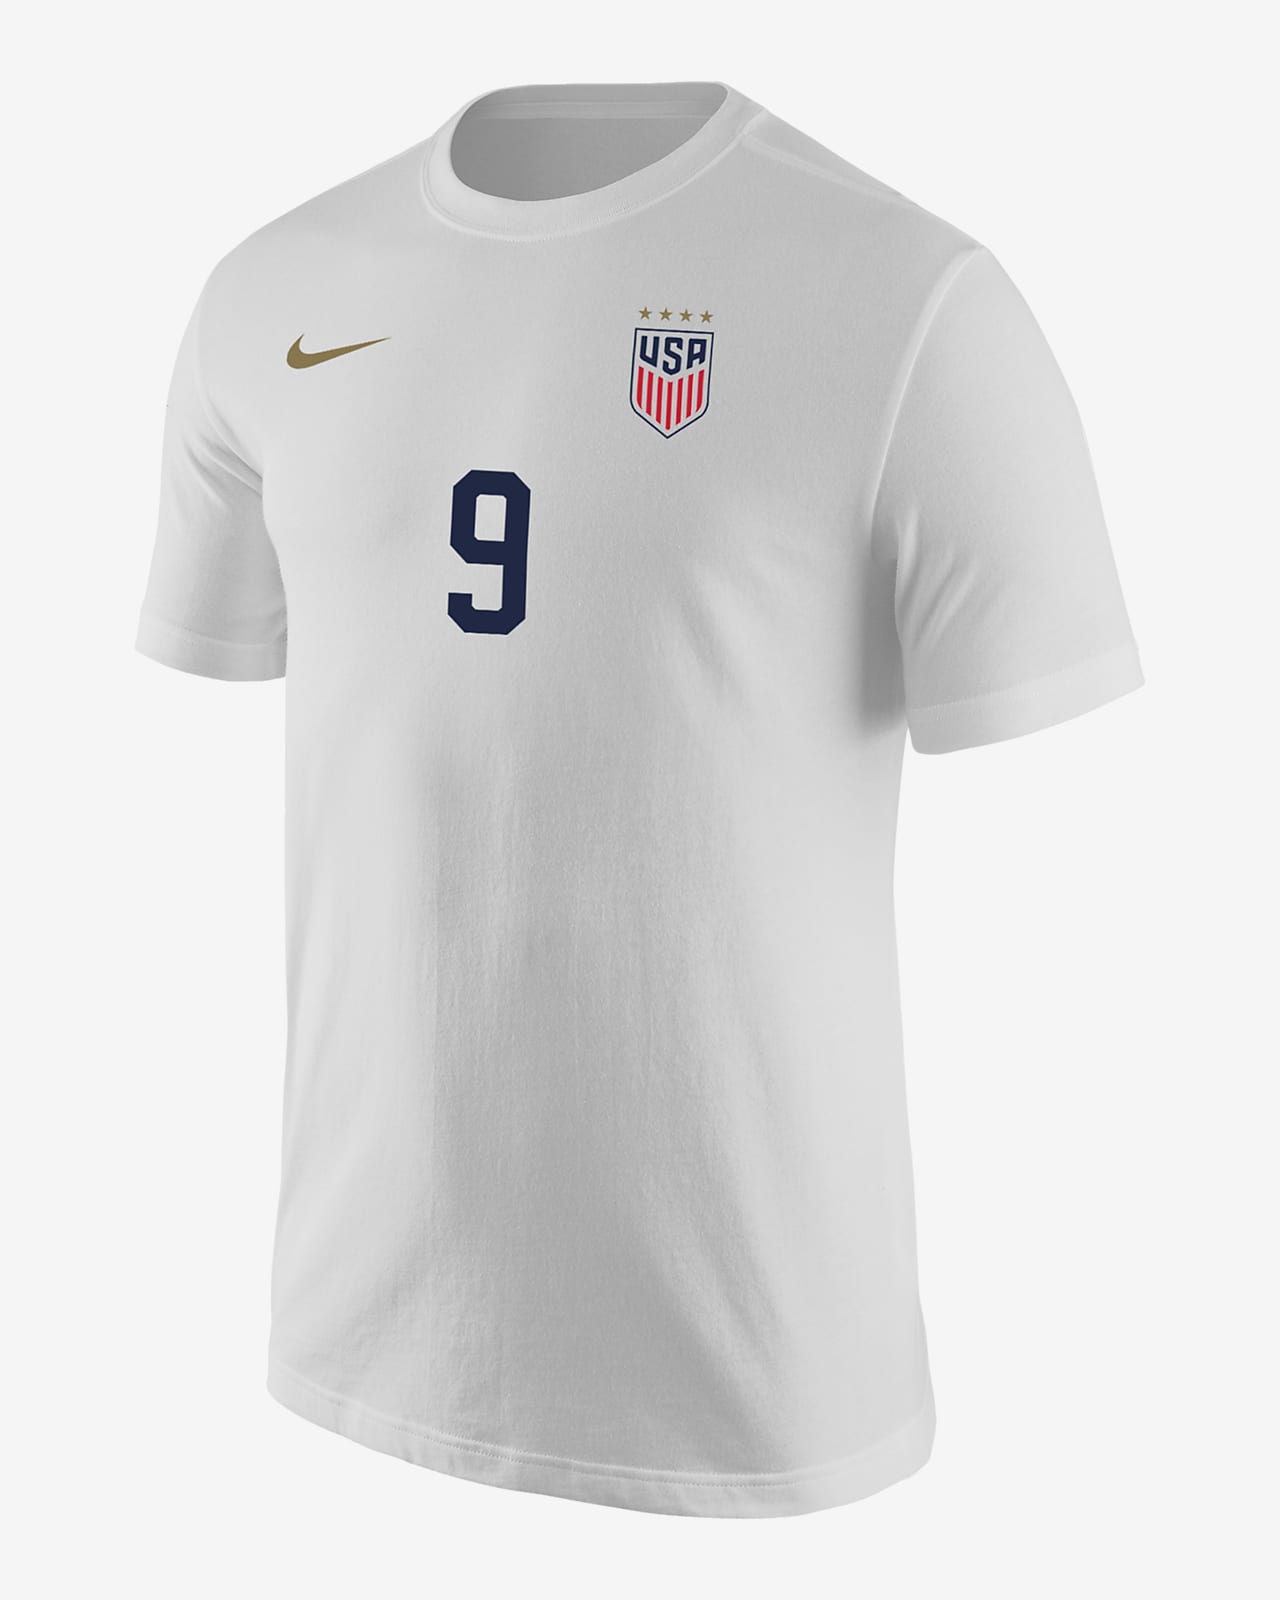 Mallory Swanson USWNT Men's Nike Soccer T-Shirt